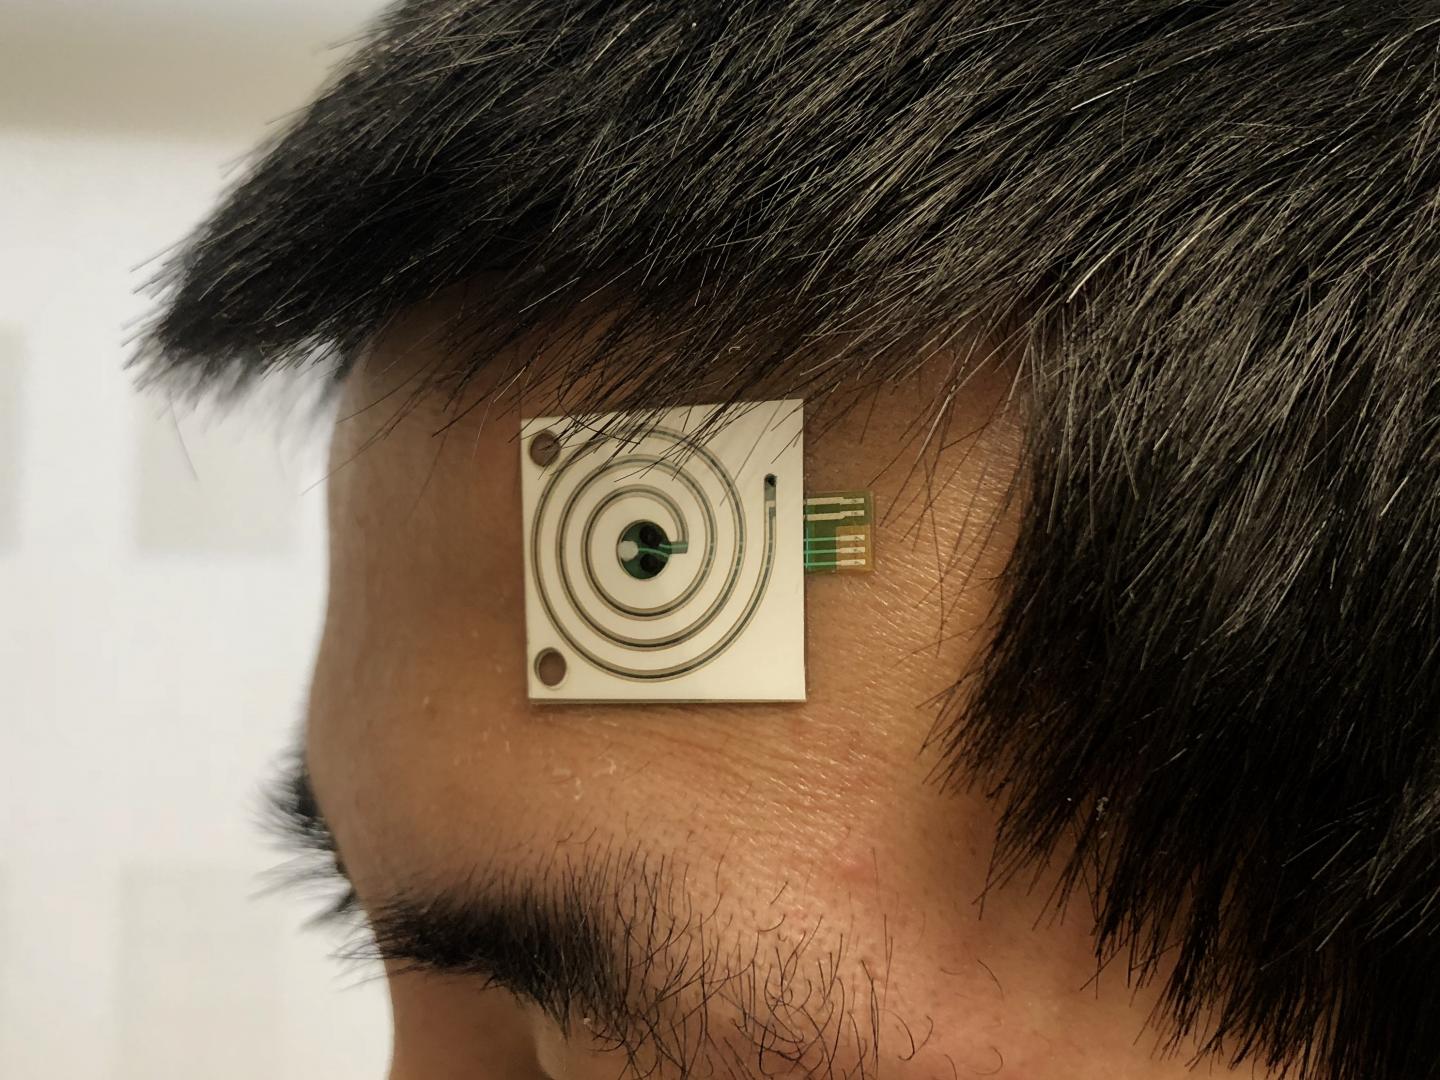 University of California at Berkeley develops sweat sensor